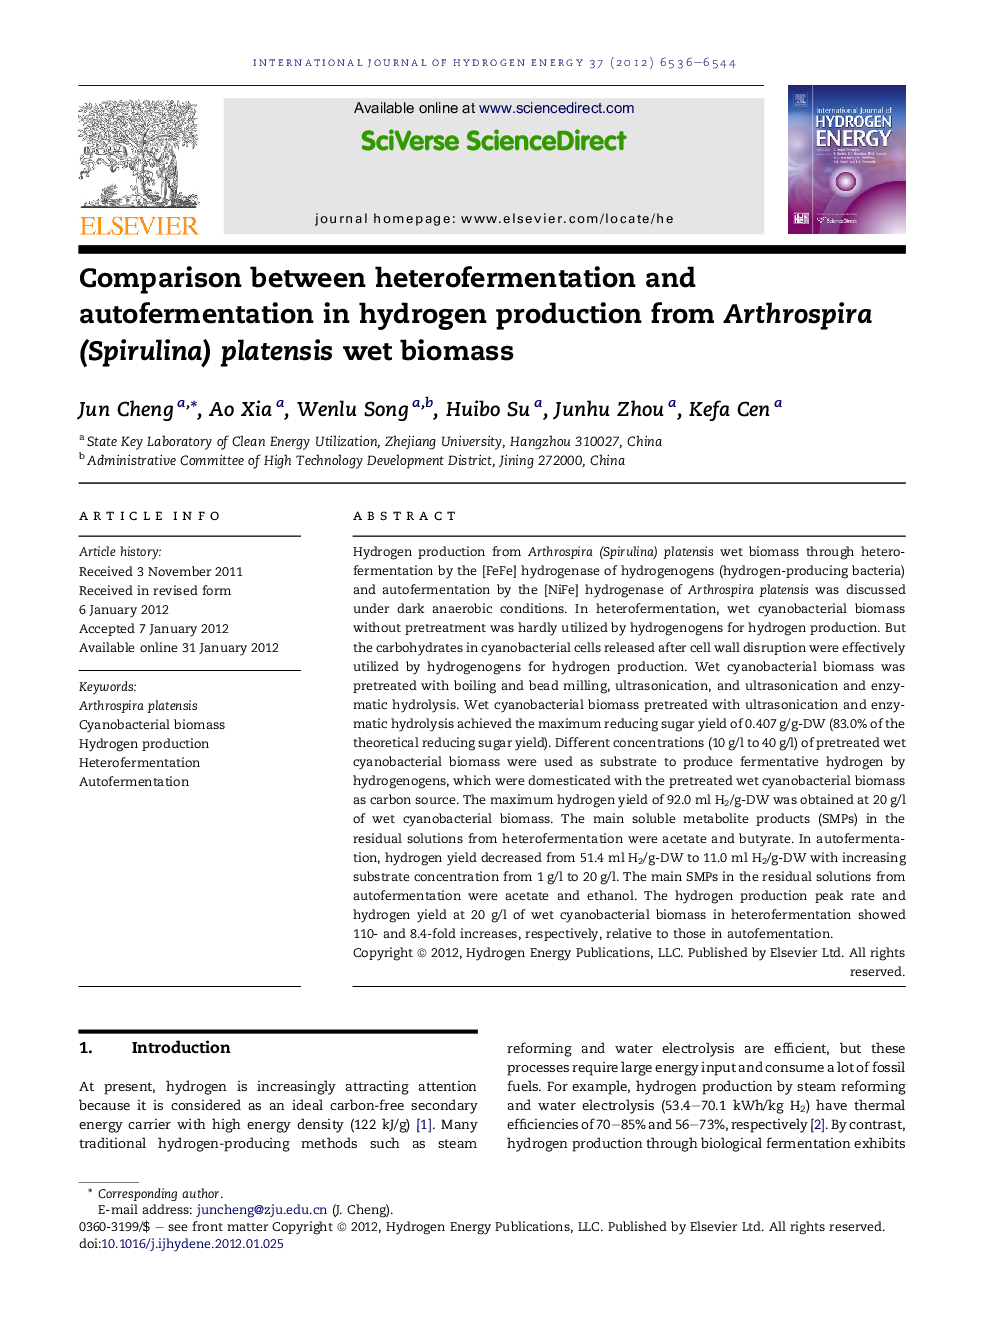 Comparison between heterofermentation and autofermentation in hydrogen production from Arthrospira (Spirulina) platensis wet biomass